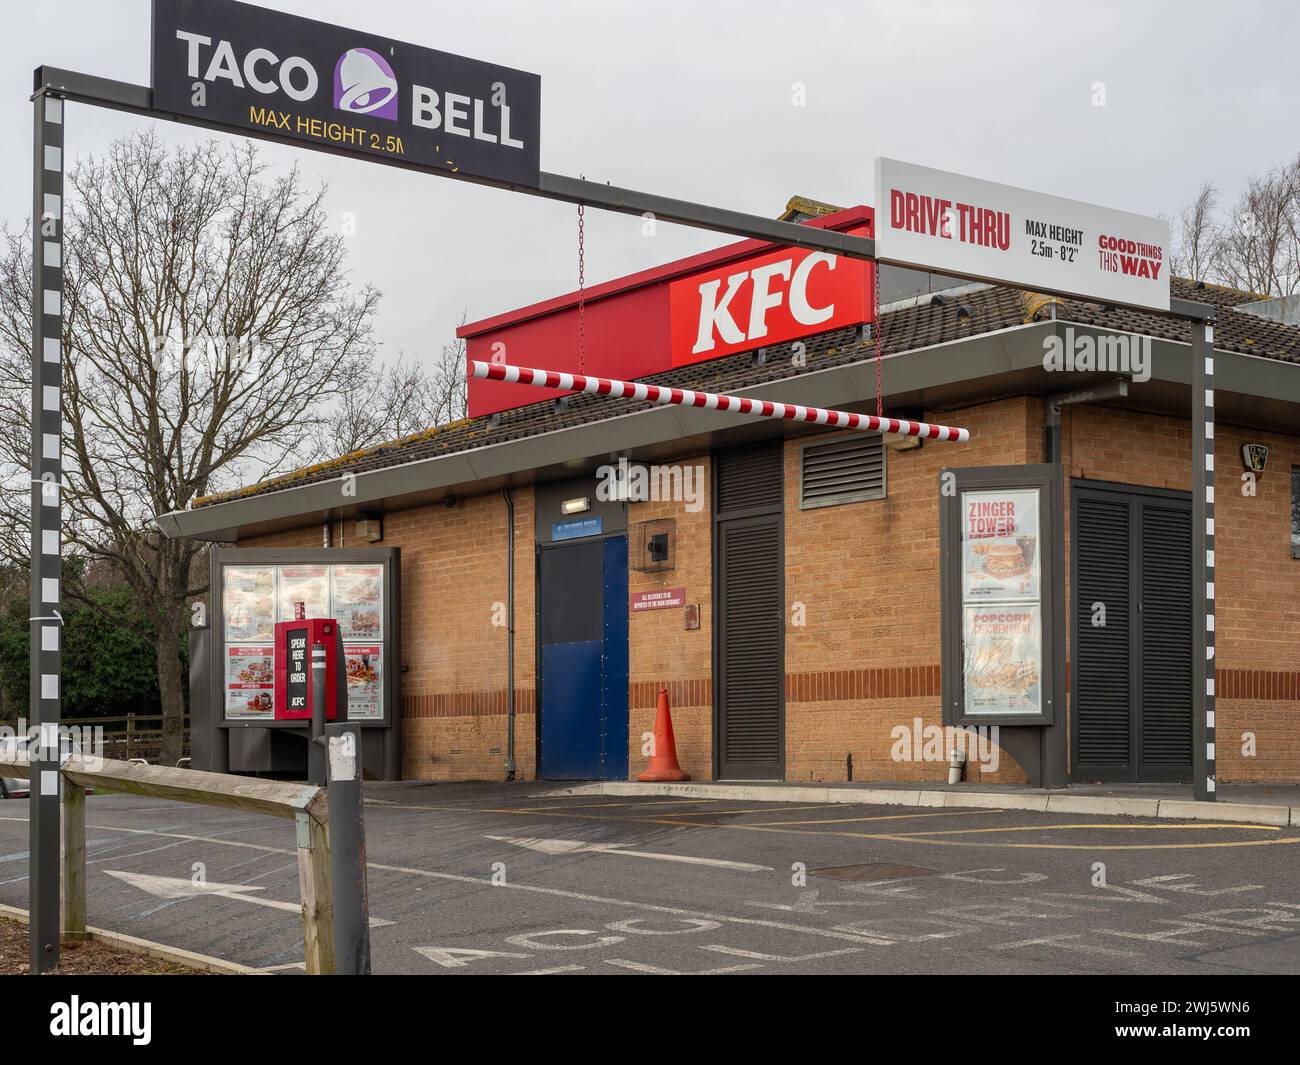 Vehicle entrance for Taco Bell and KFC drive thru restaurants, Sixfields, Northampton, UK Stock Photo